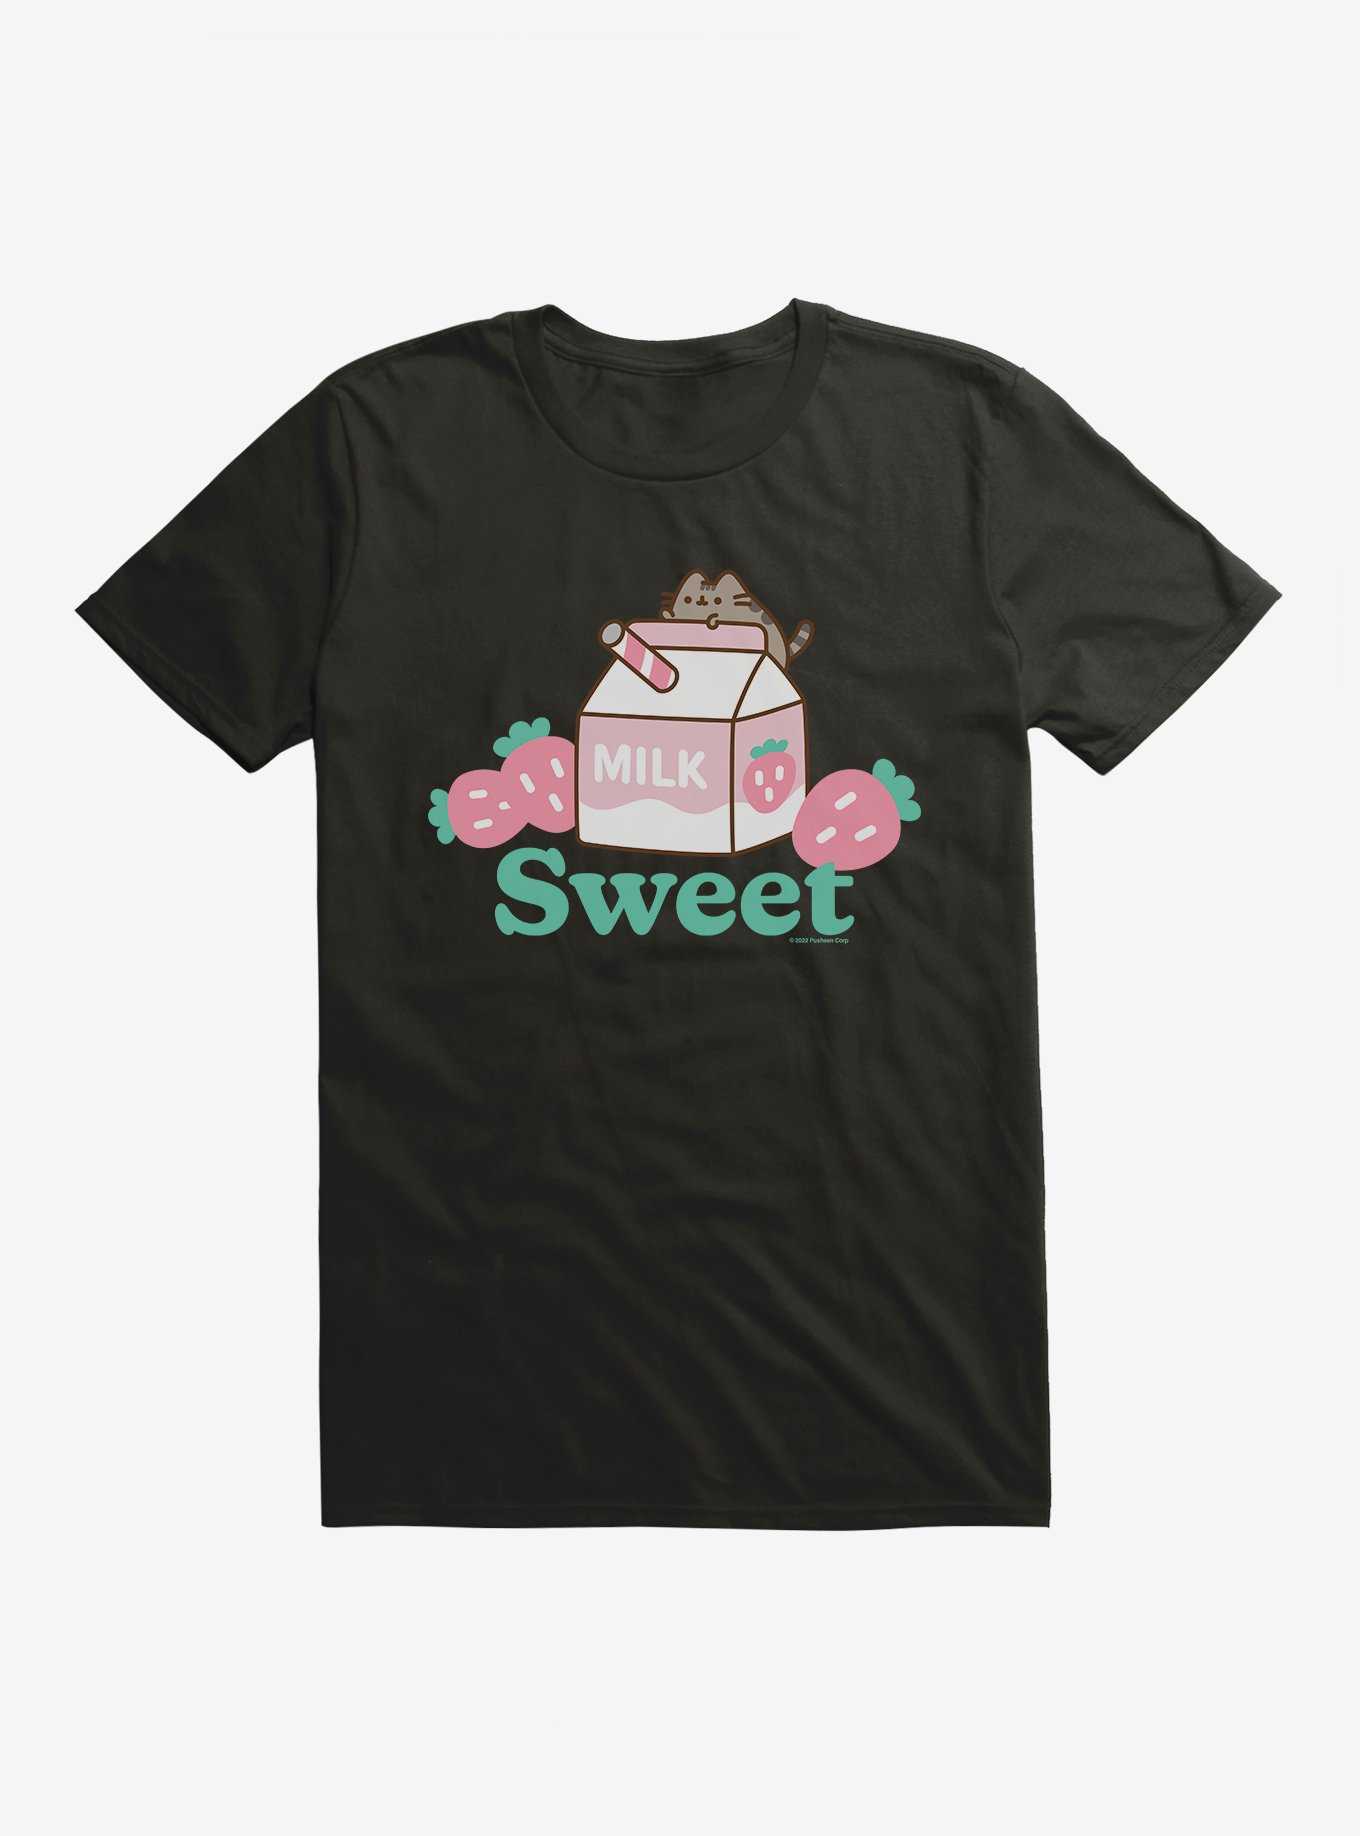 Pusheen Sips Sweet T-Shirt, , hi-res